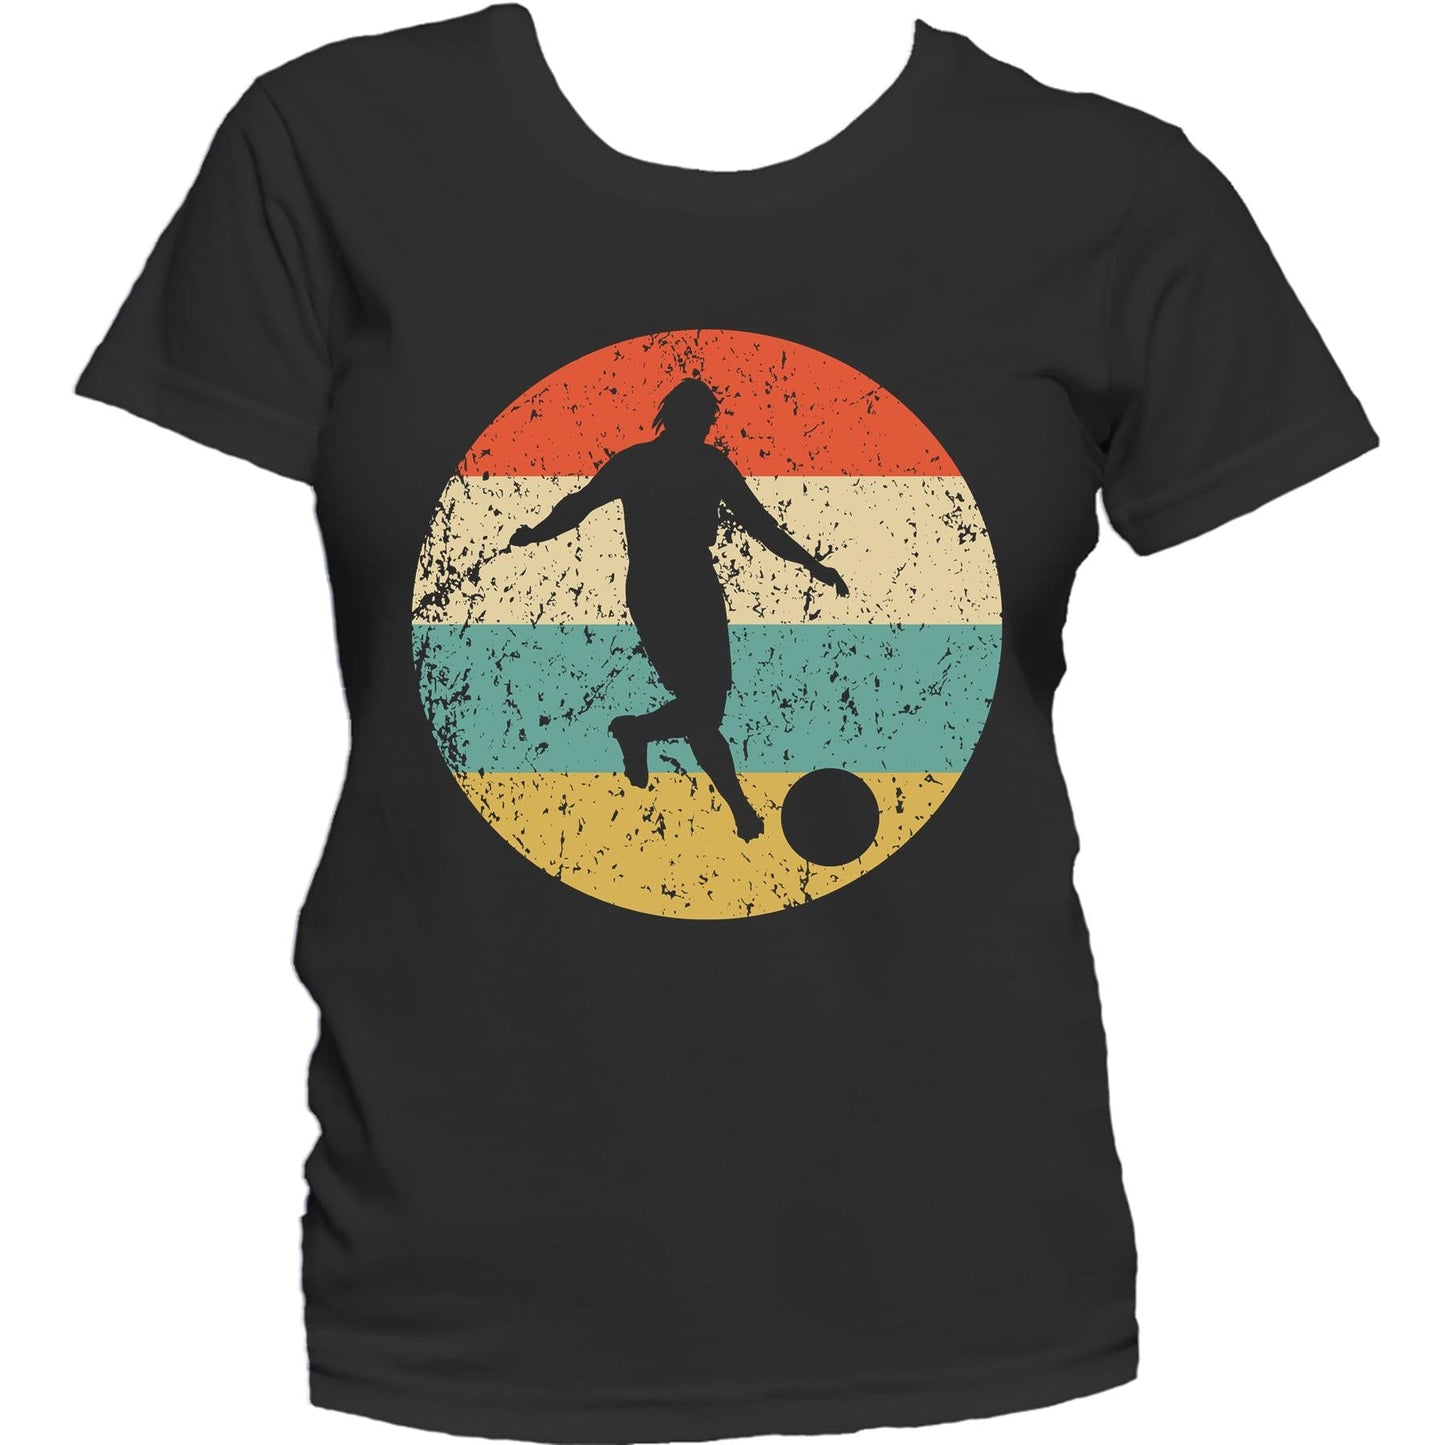 Kickball Shirt - Vintage Retro Kickball Player Women's T-Shirt